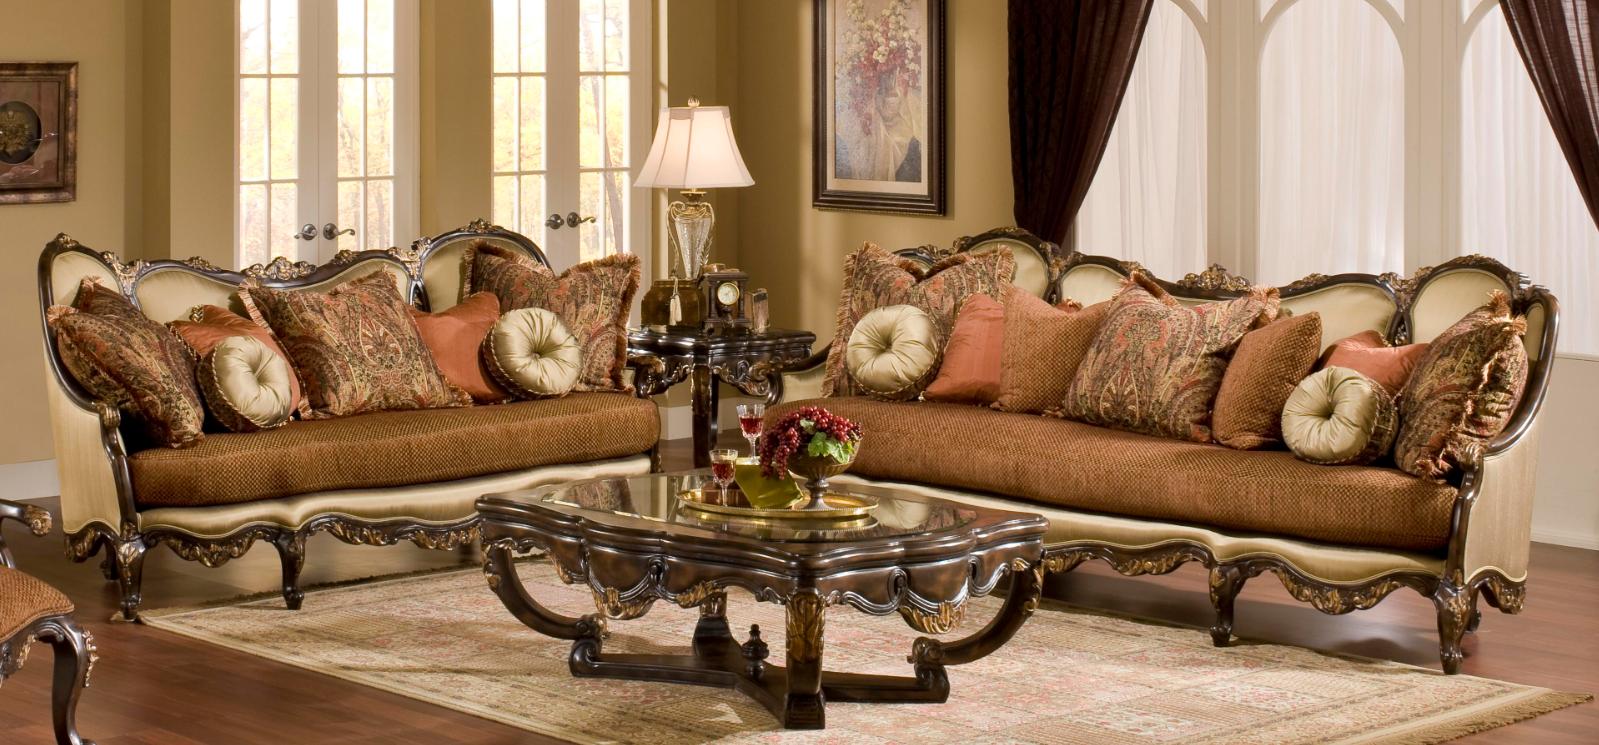 

    
Luxury Chenille Sofa Set 2Pcs Antique Mahogany Wood Benetti's Abrianna Classic
